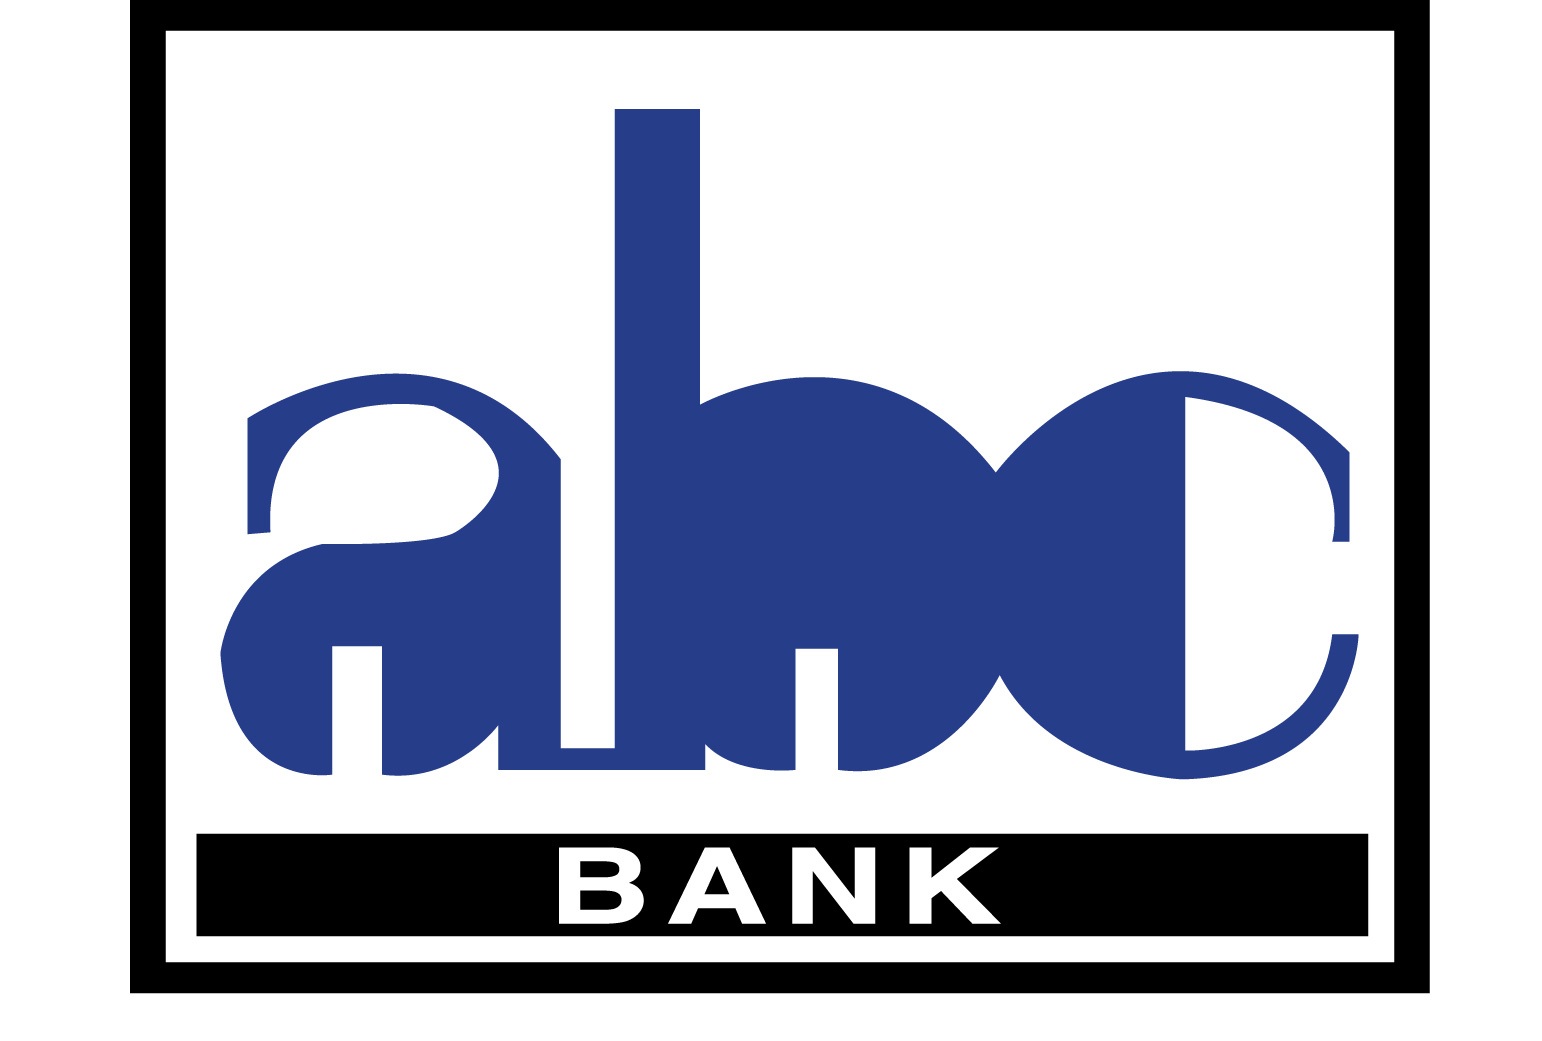 Abc bank. ABC банк. ABC Bank logo. АБС банка логотип.